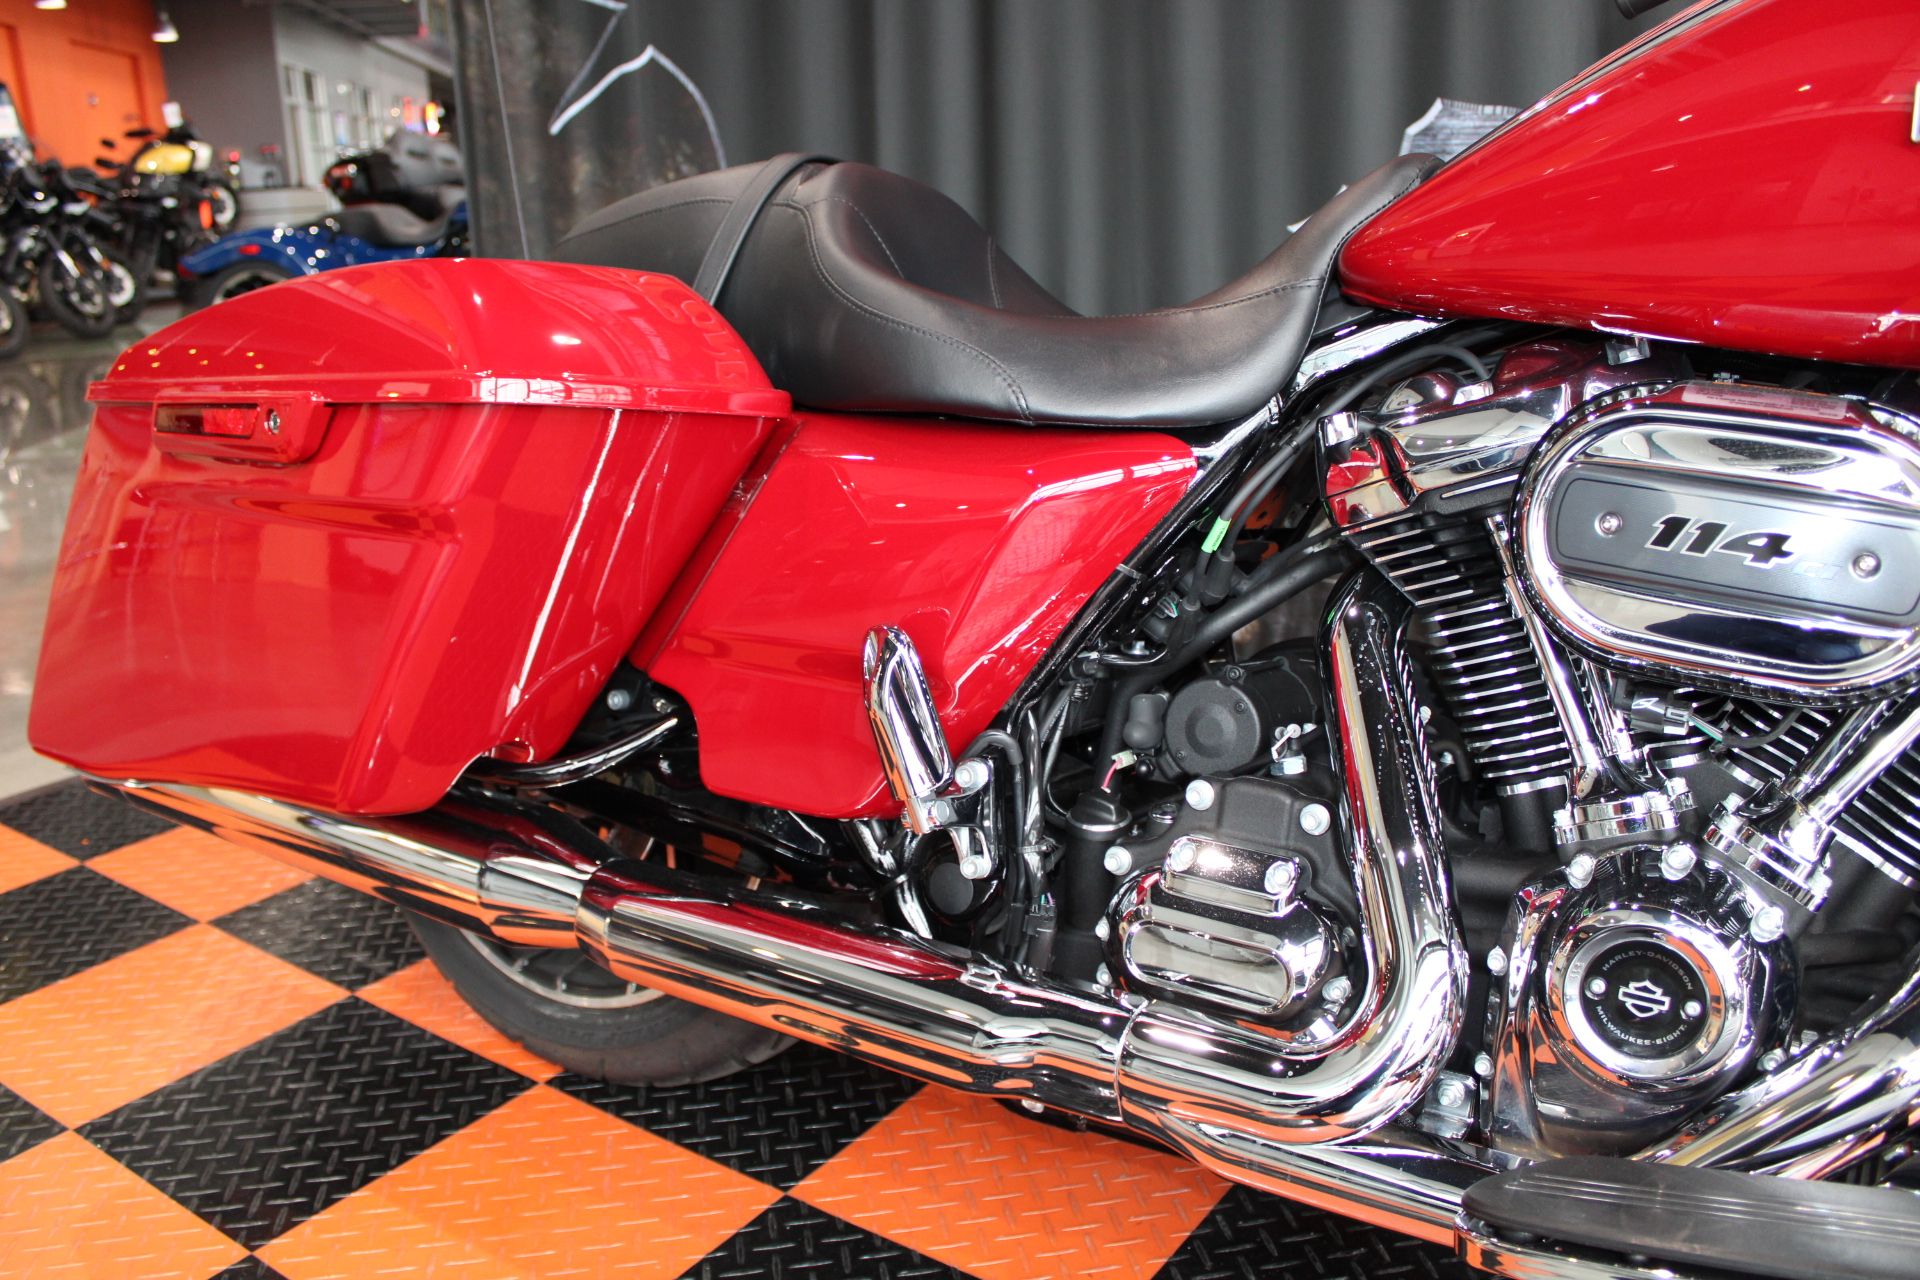 2021 Harley-Davidson Street Glide® Special in Shorewood, Illinois - Photo 8